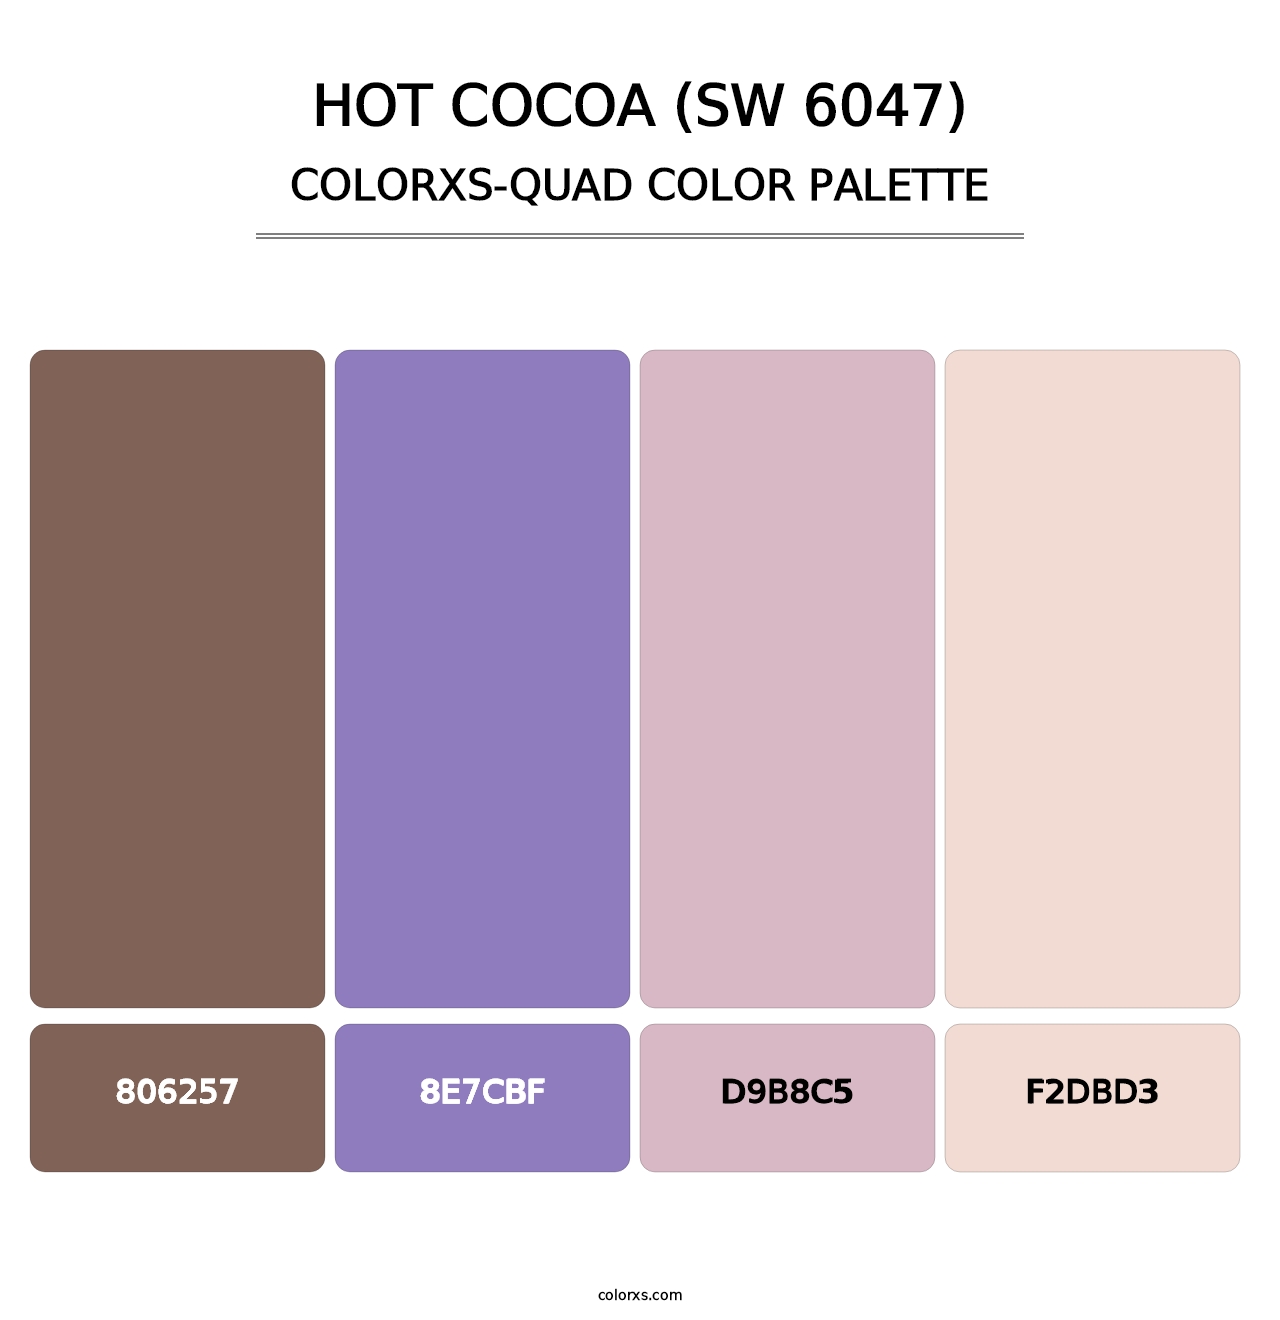 Hot Cocoa (SW 6047) - Colorxs Quad Palette